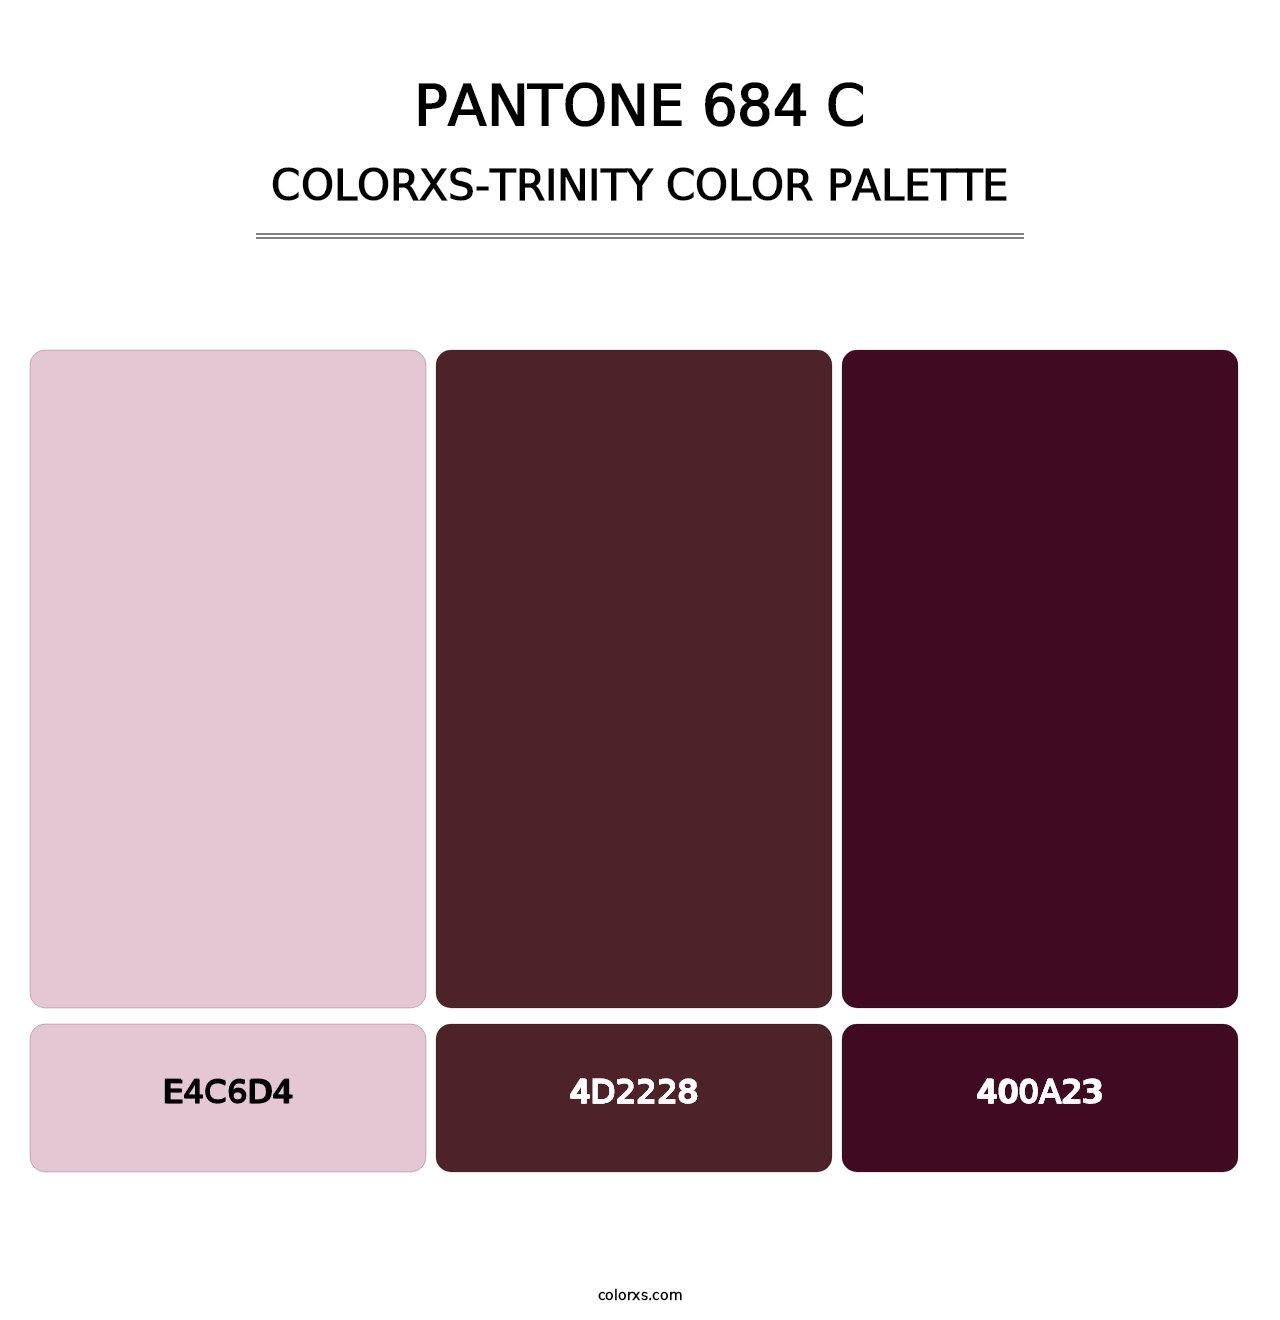 PANTONE 684 C - Colorxs Trinity Palette